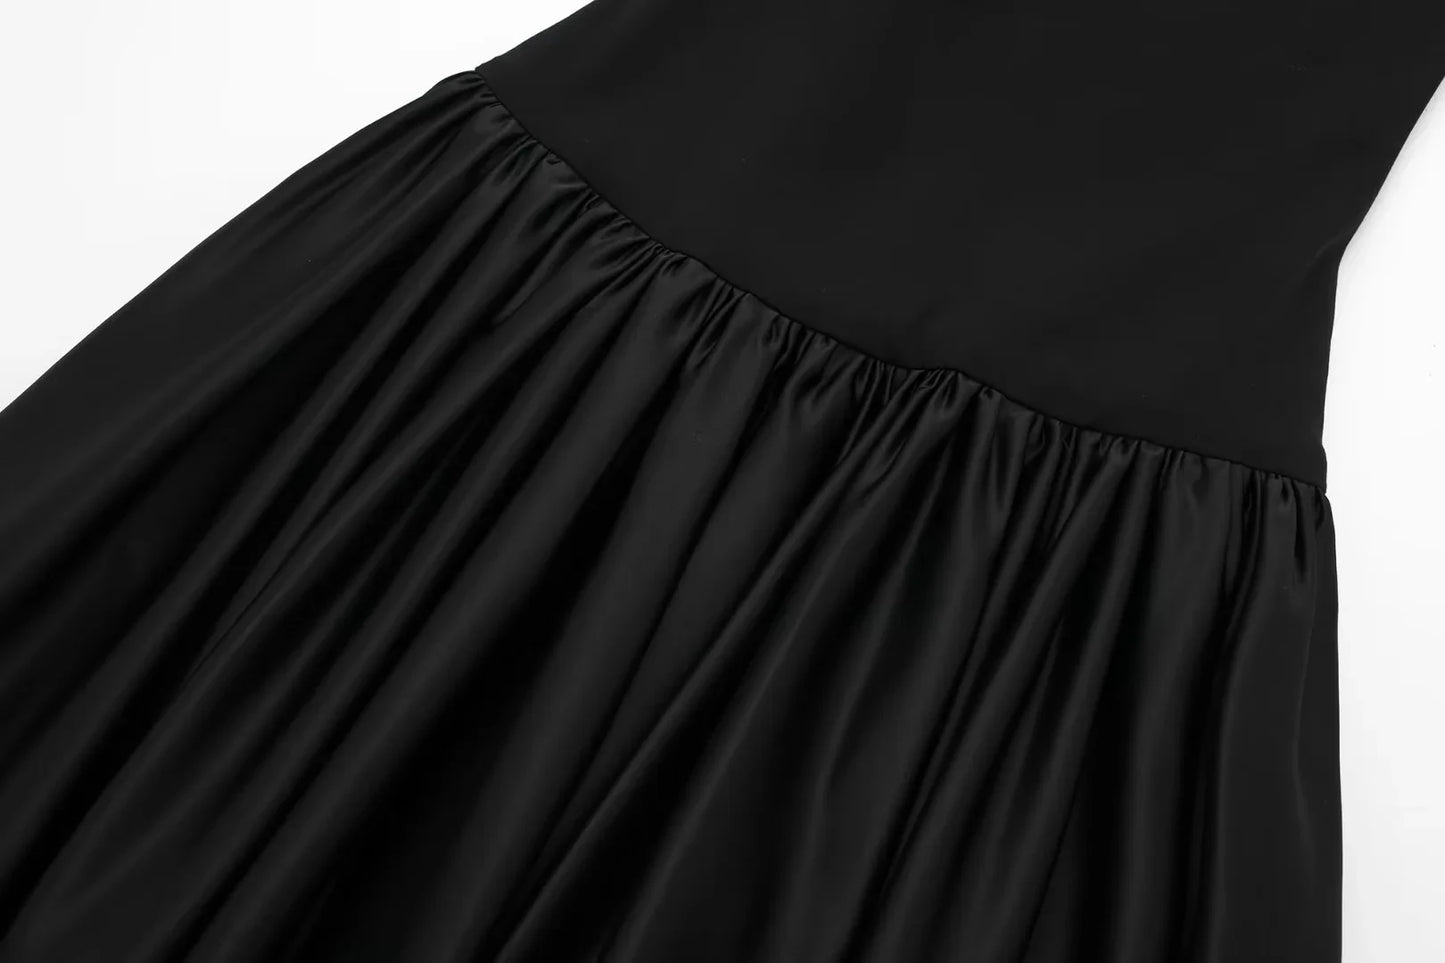 Jersey and Satin Drop Waist Black Vest Dress